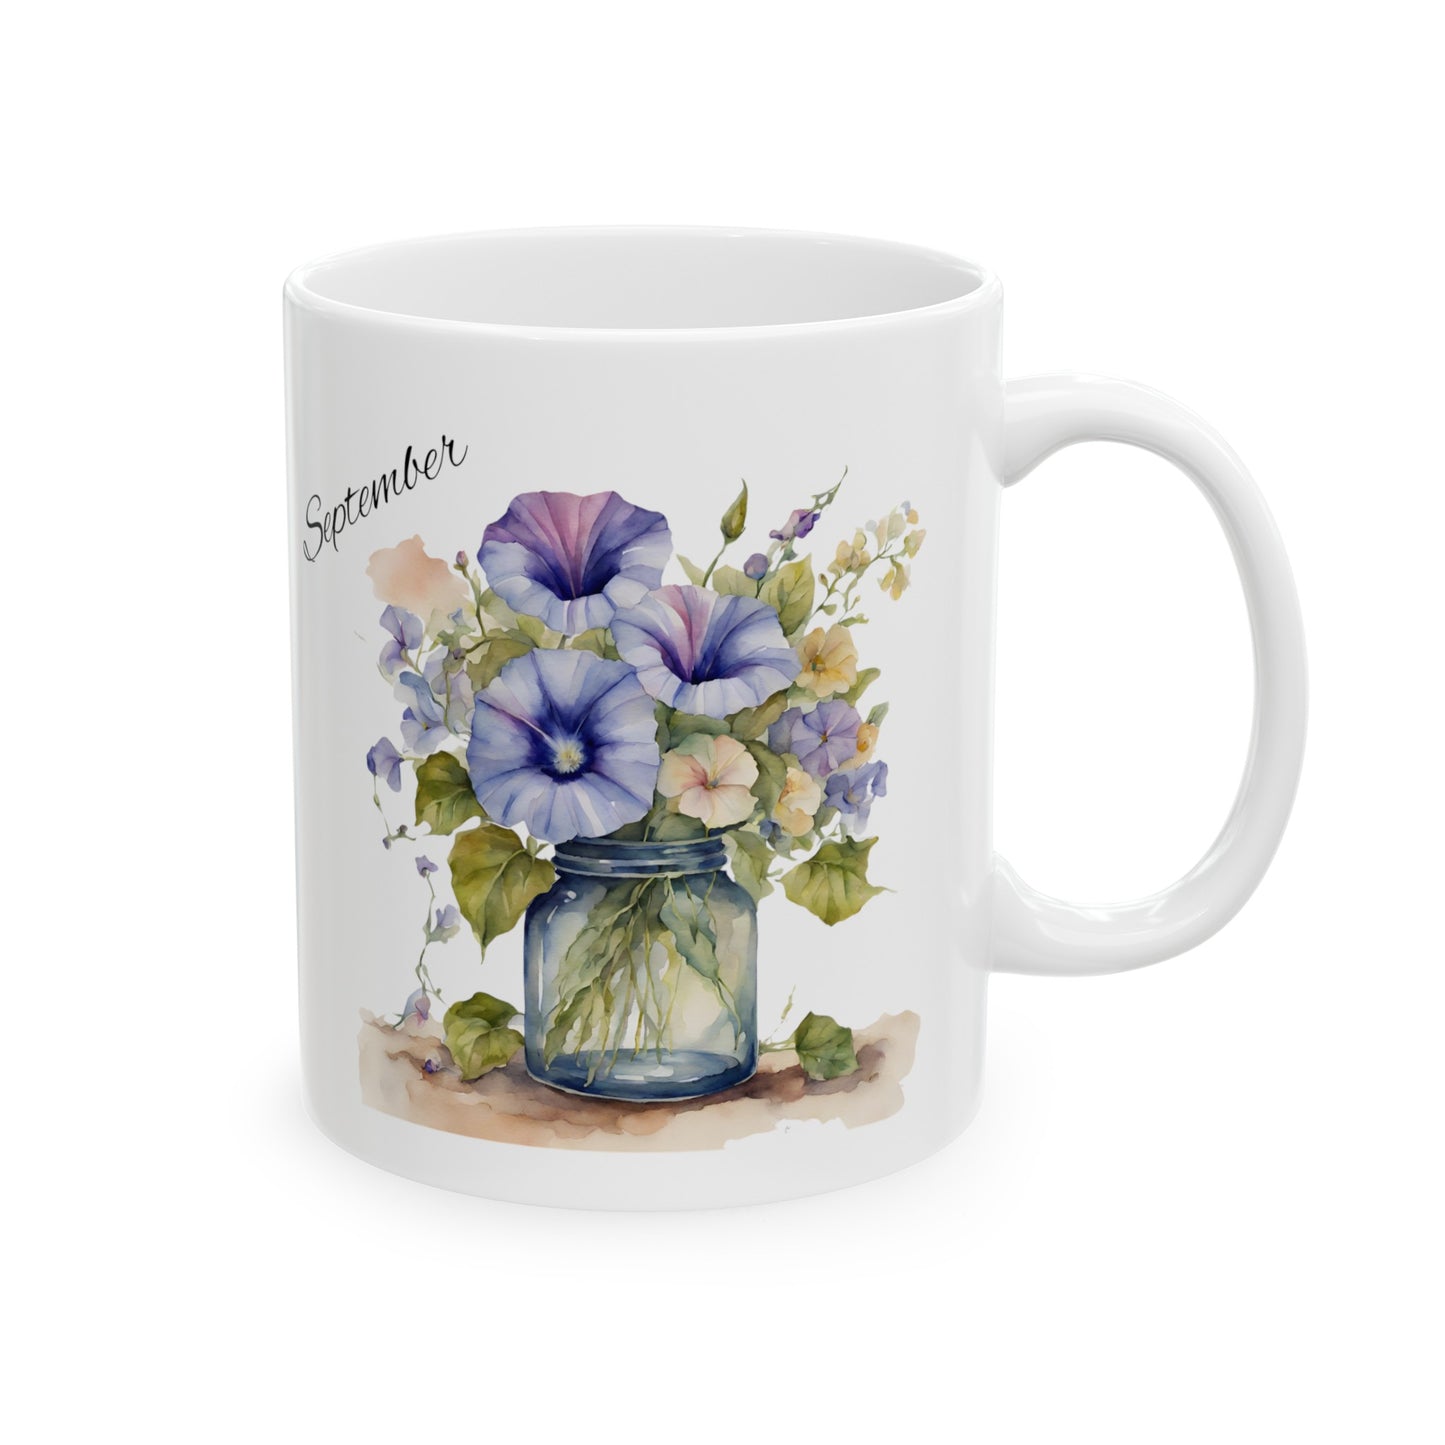 September Ceramic Mug, 11oz, September Birth flower Ceramic Mug - The Witchy Gypsy